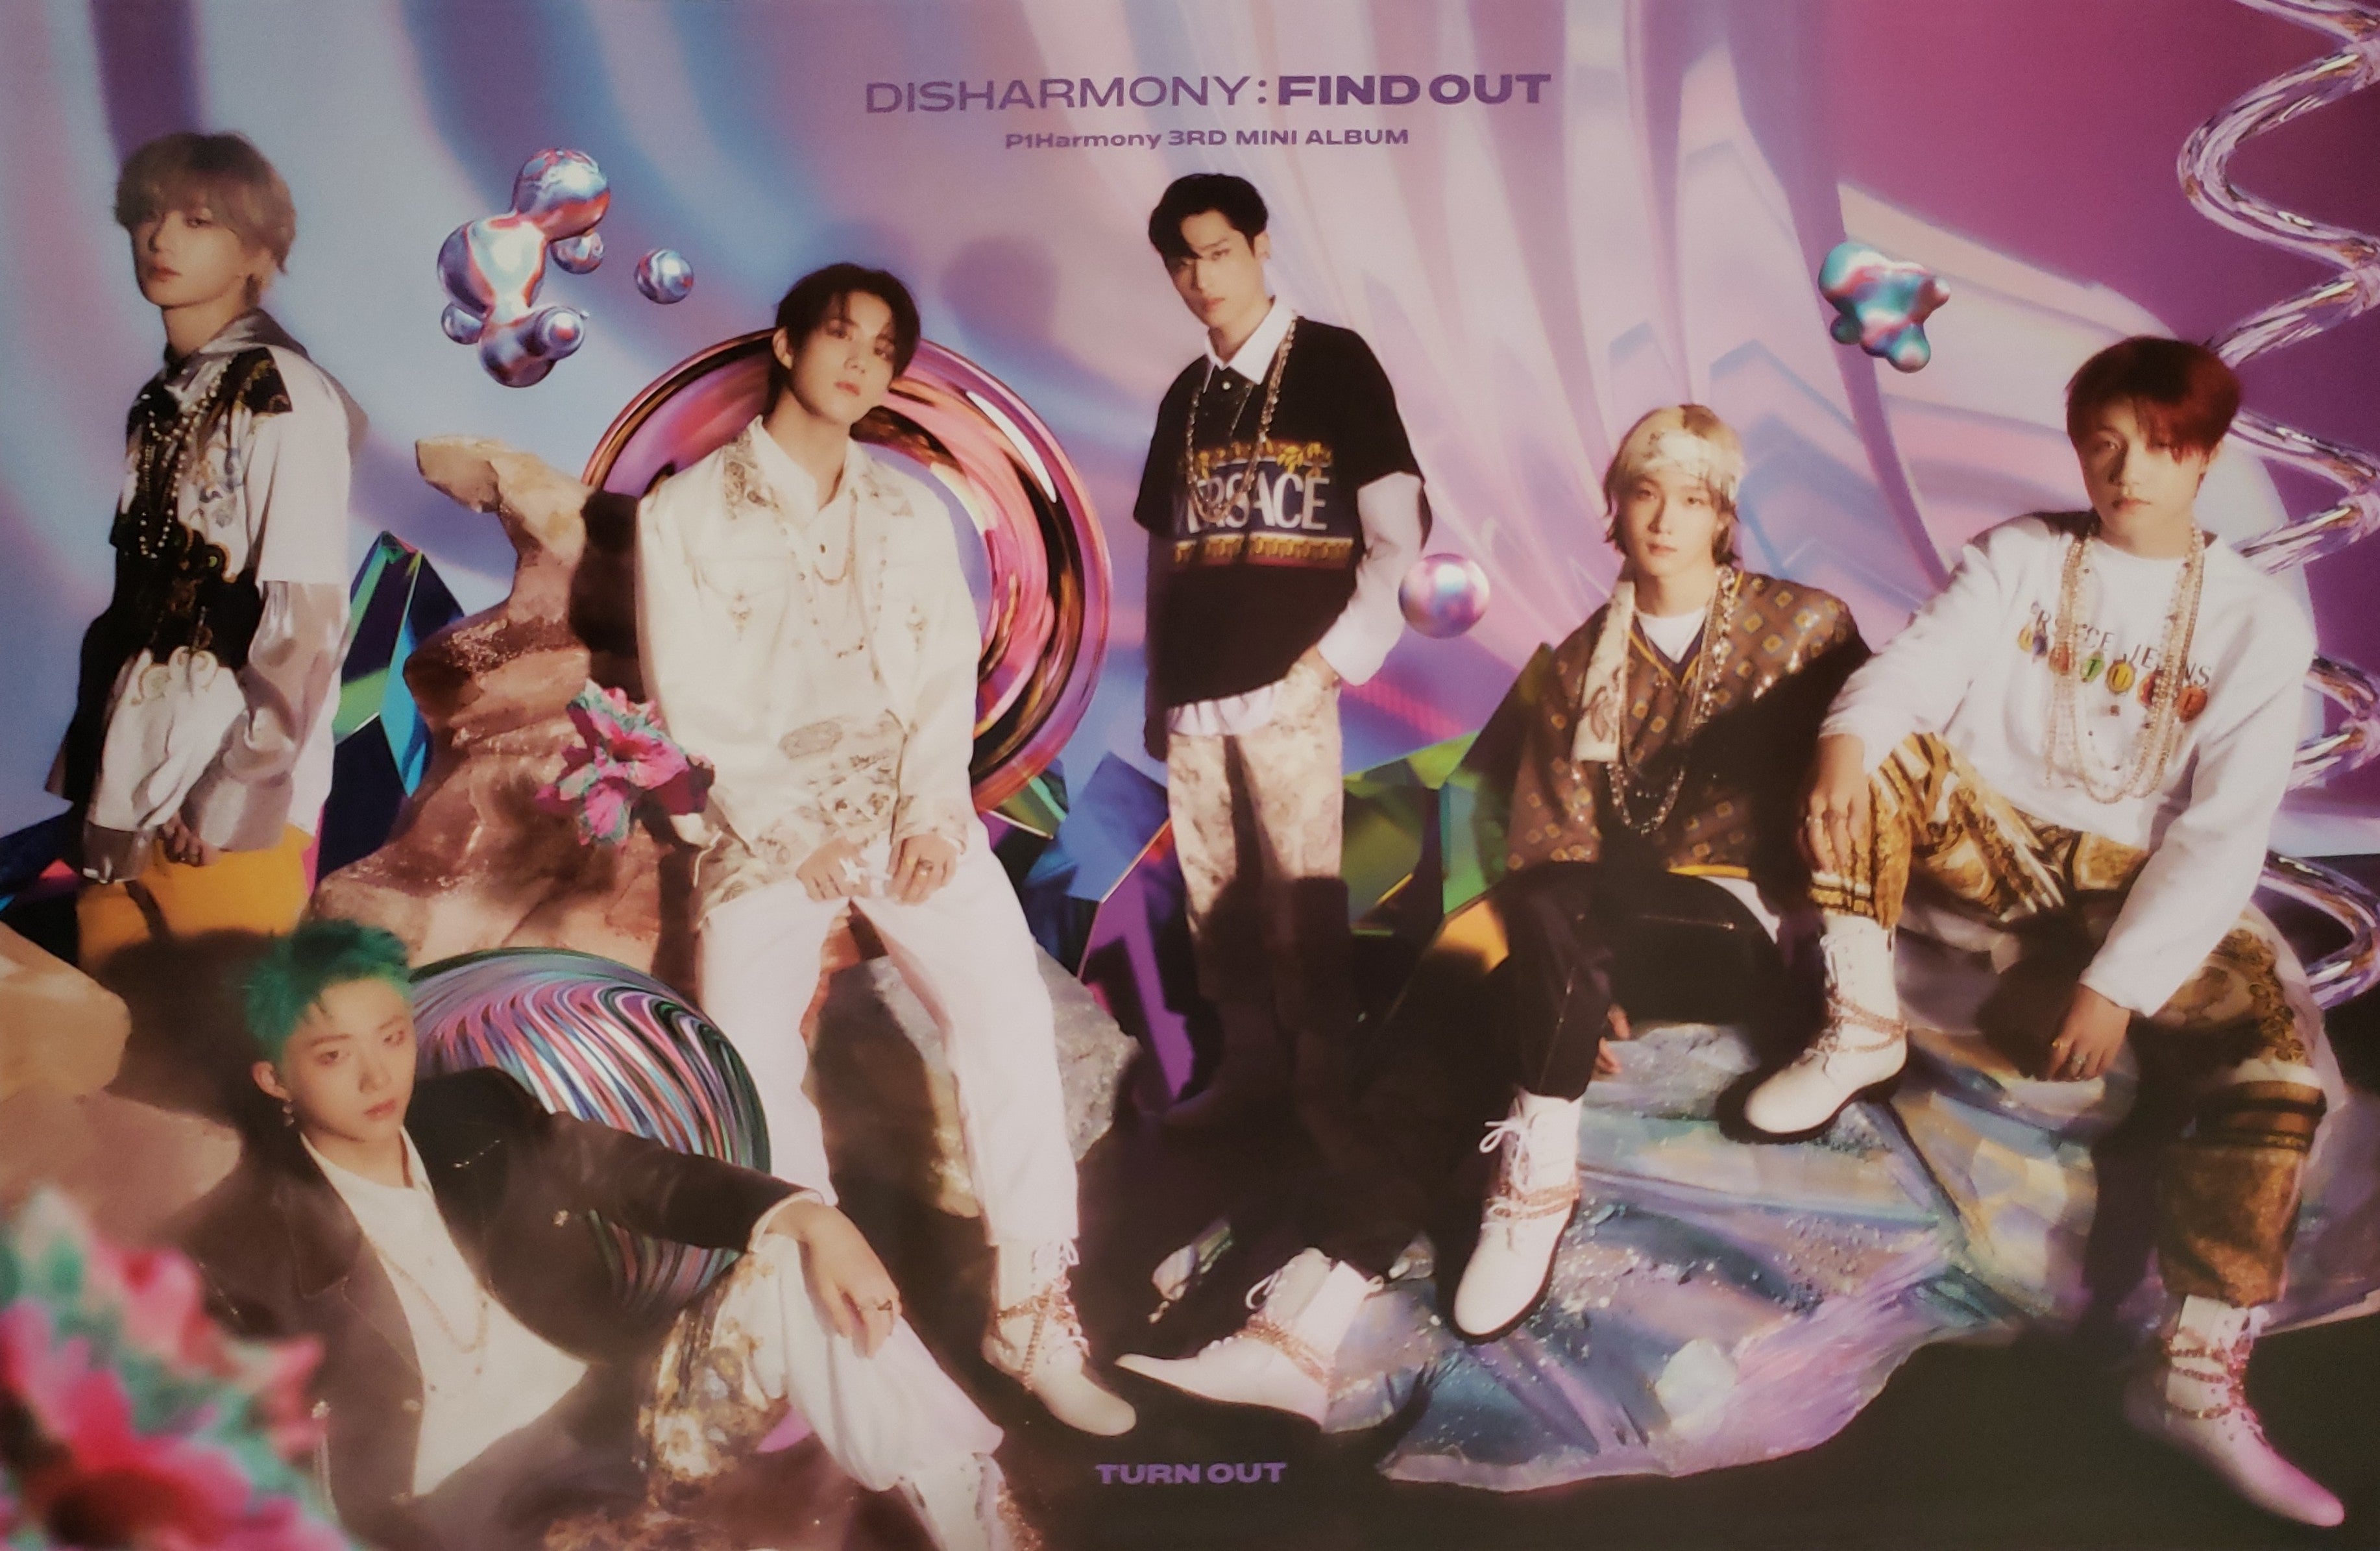 P1HARMONY DISHARMONY: FIND OUT 3RD MINI ALBUM